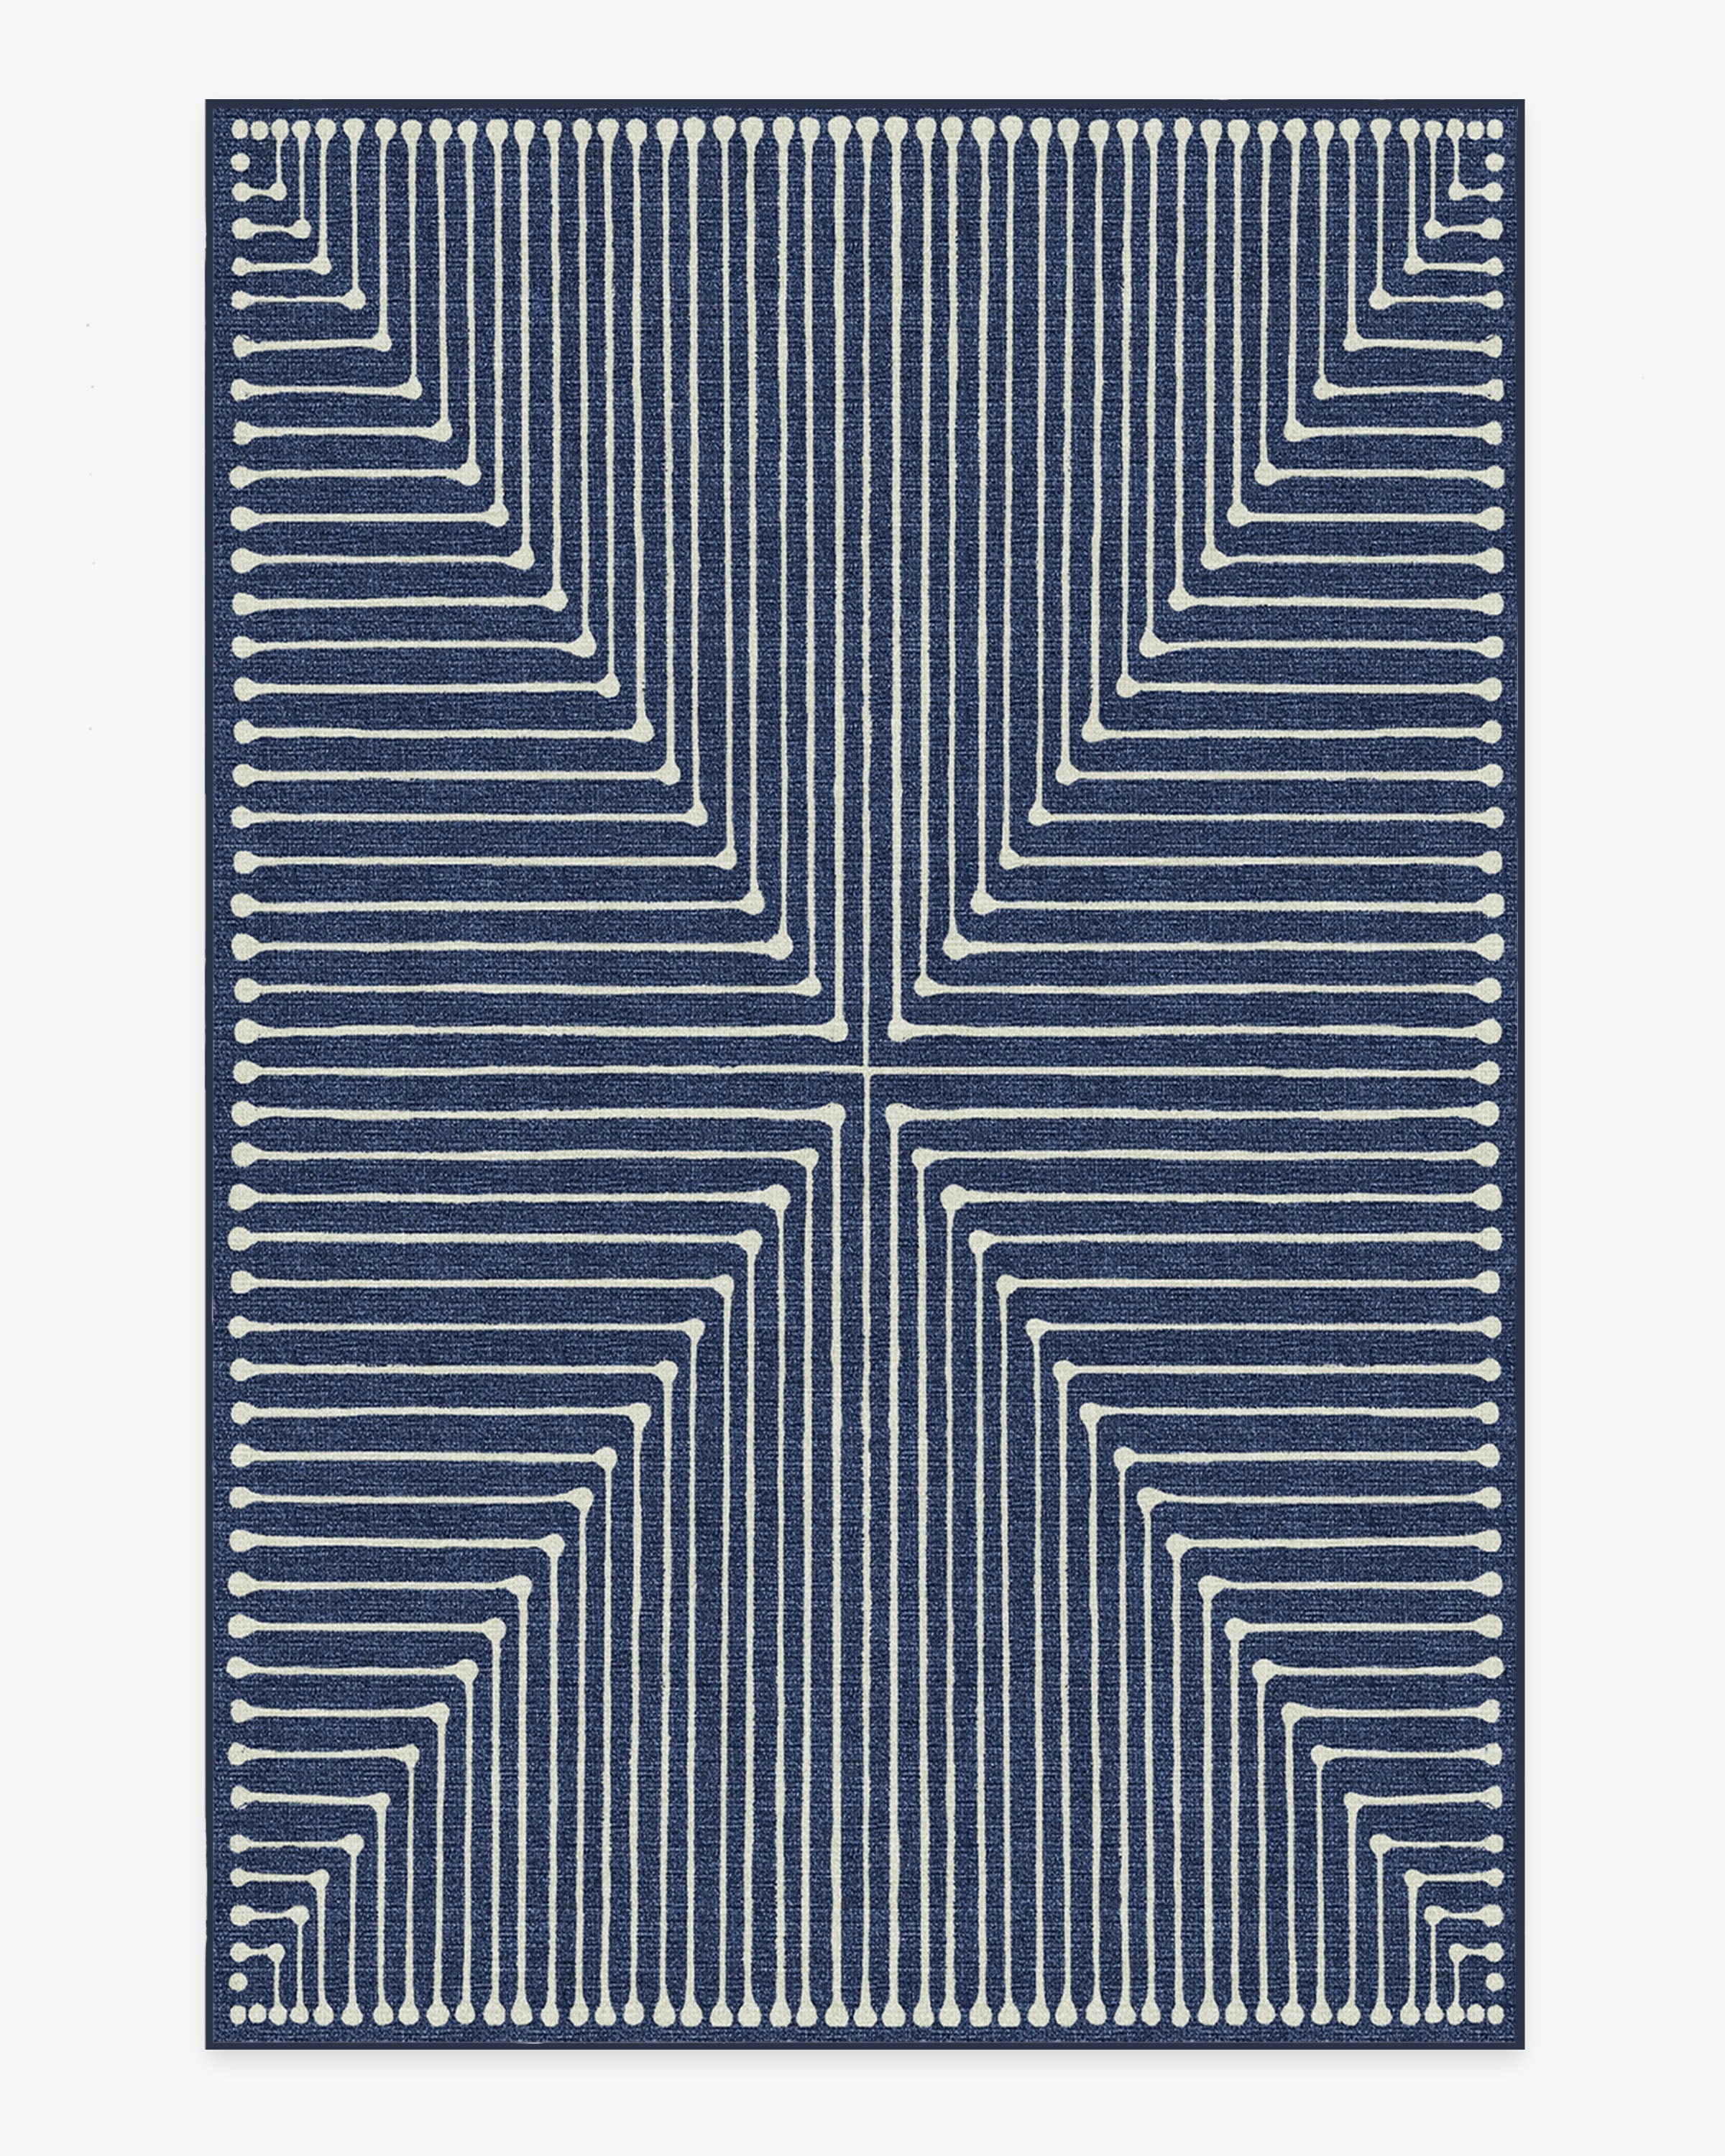 Louis Vuitton Monogram With Brand Name On Stripe Black Carpet Rugs